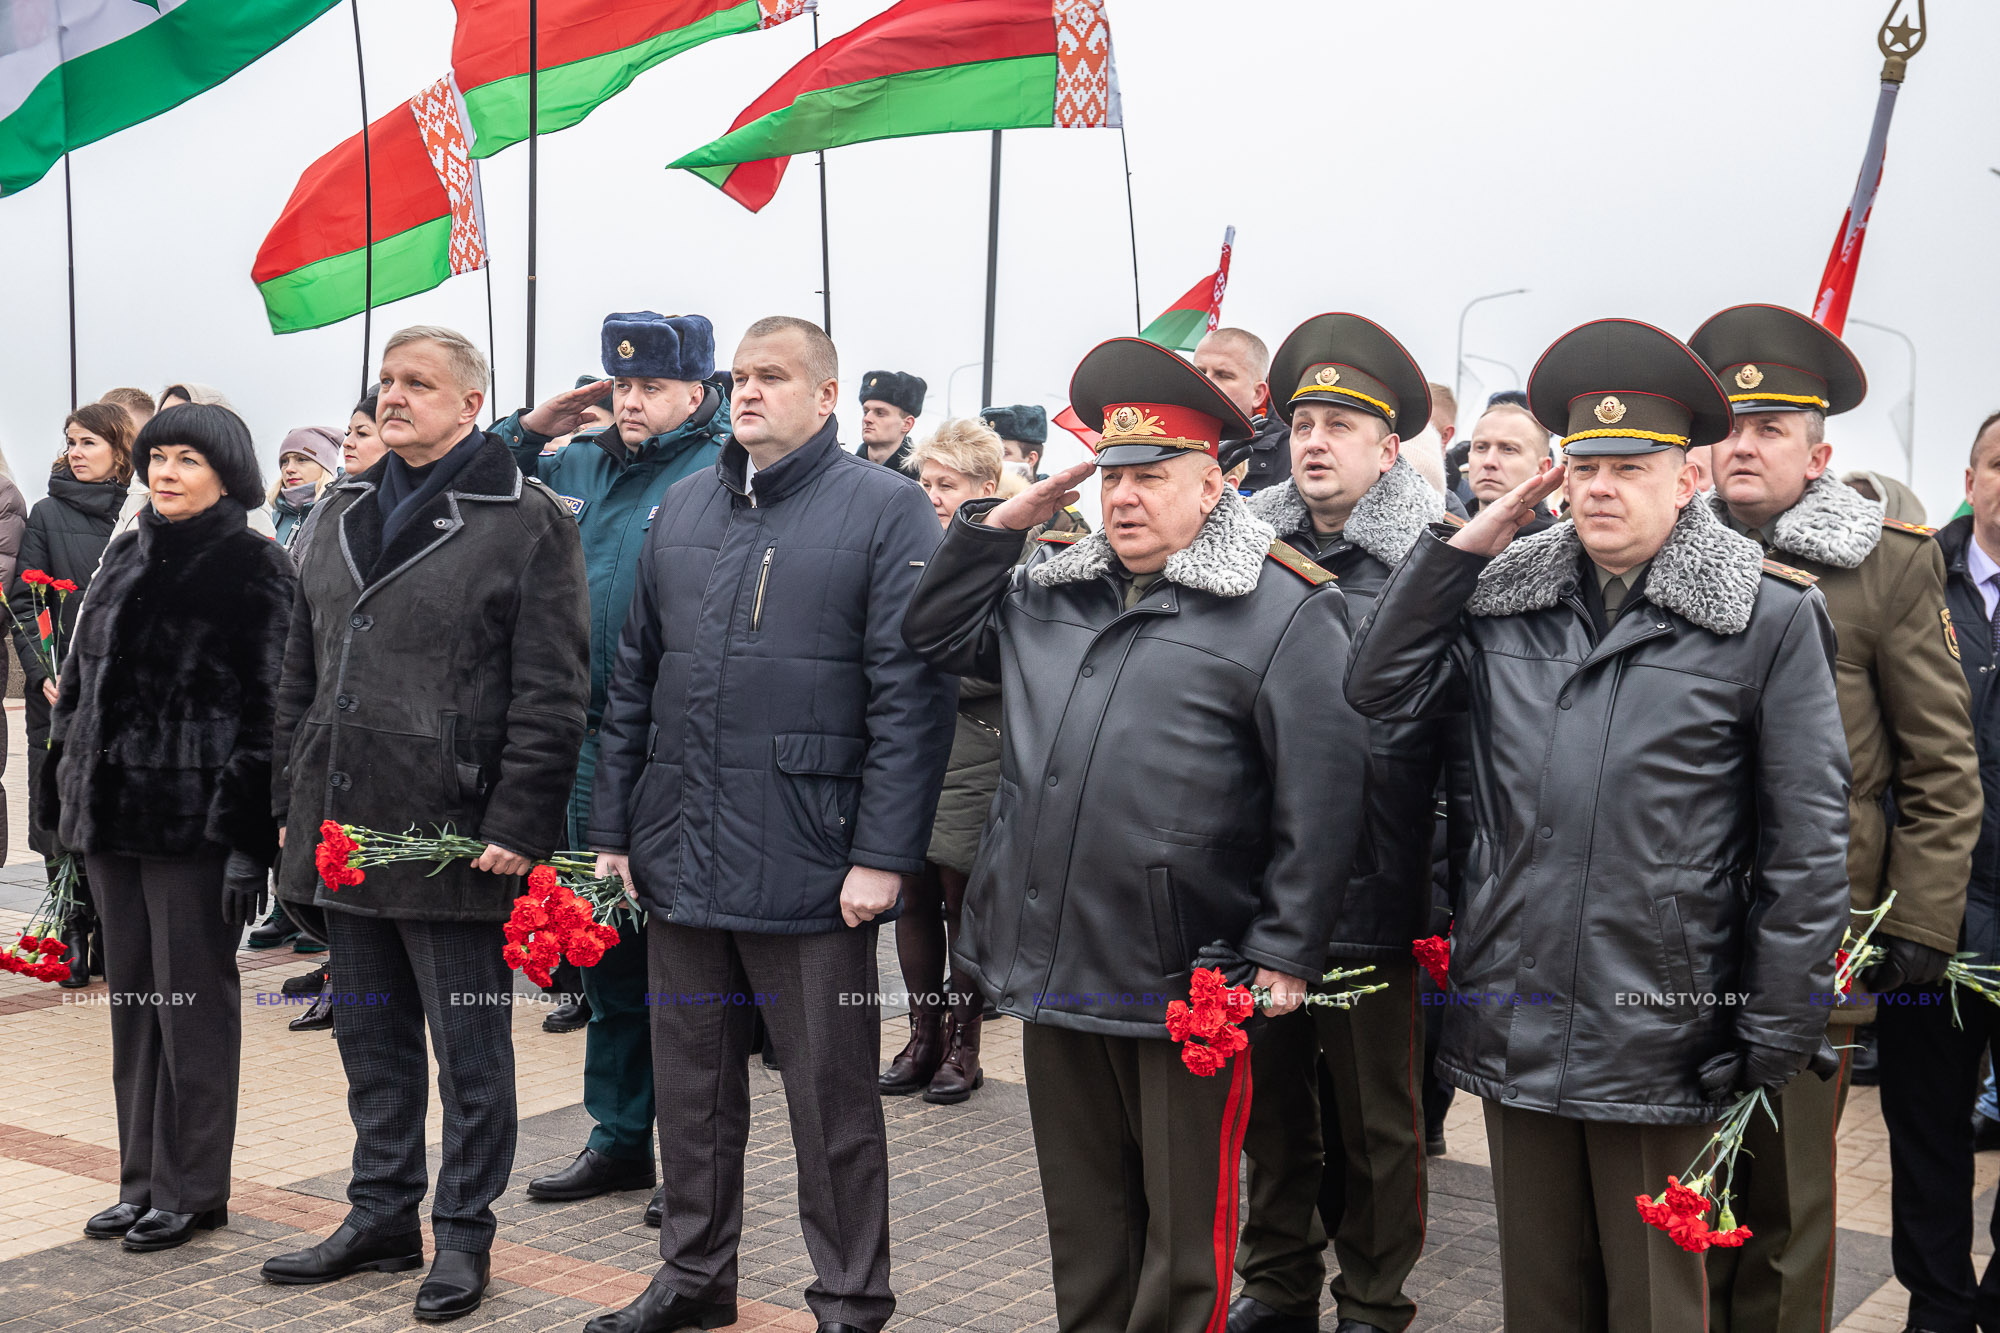  В Борисове накануне 23 февраля почтили память танкового экипажа Павла Рака 